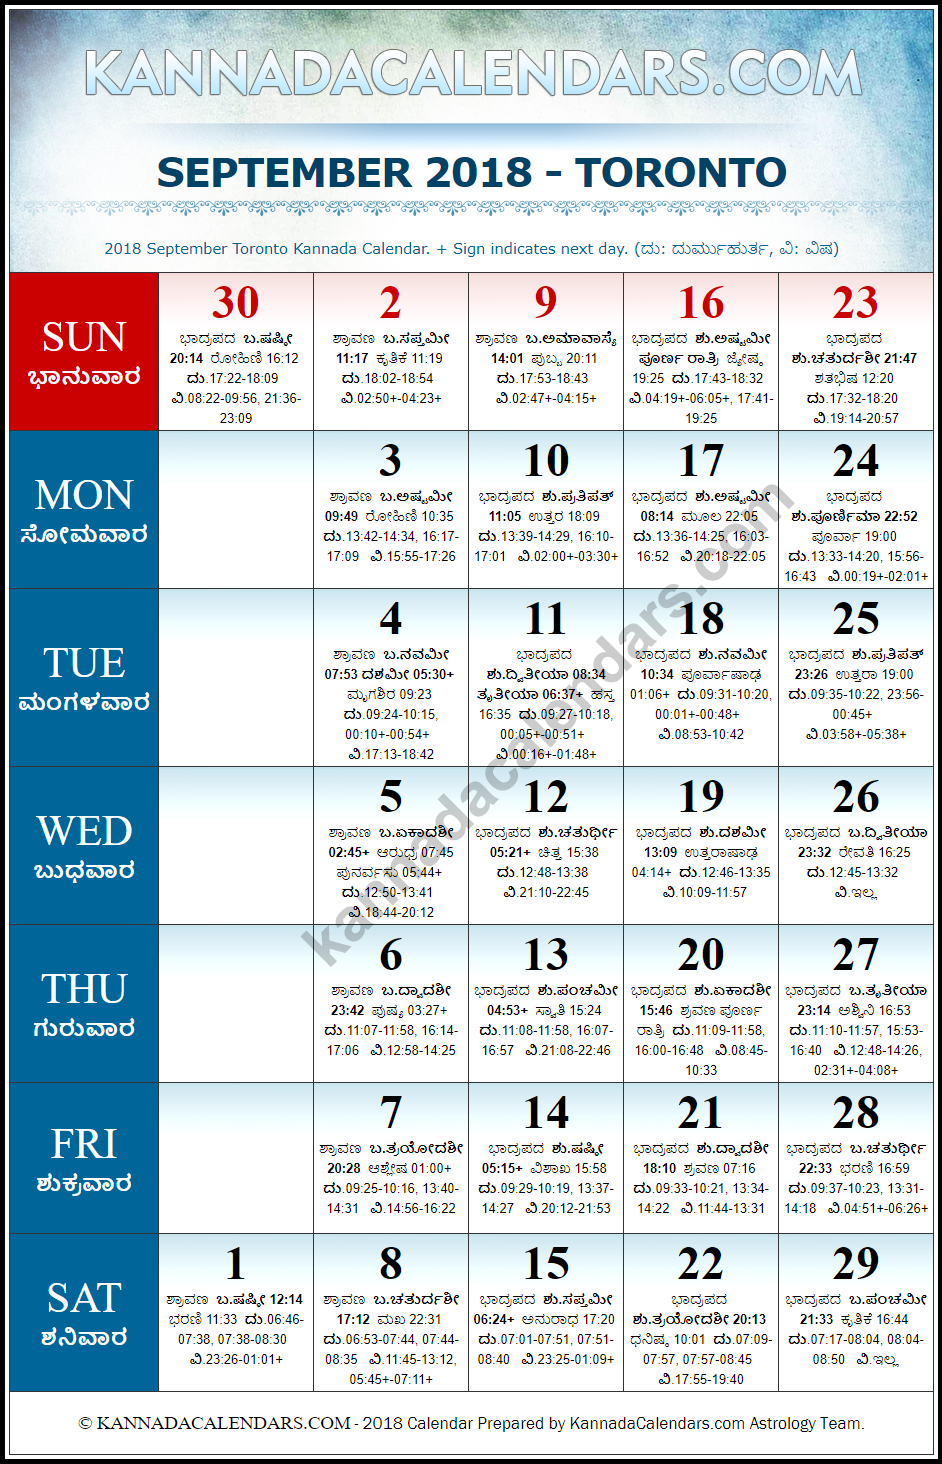 September 2018 Kannada Calendar for Toronto, Canada